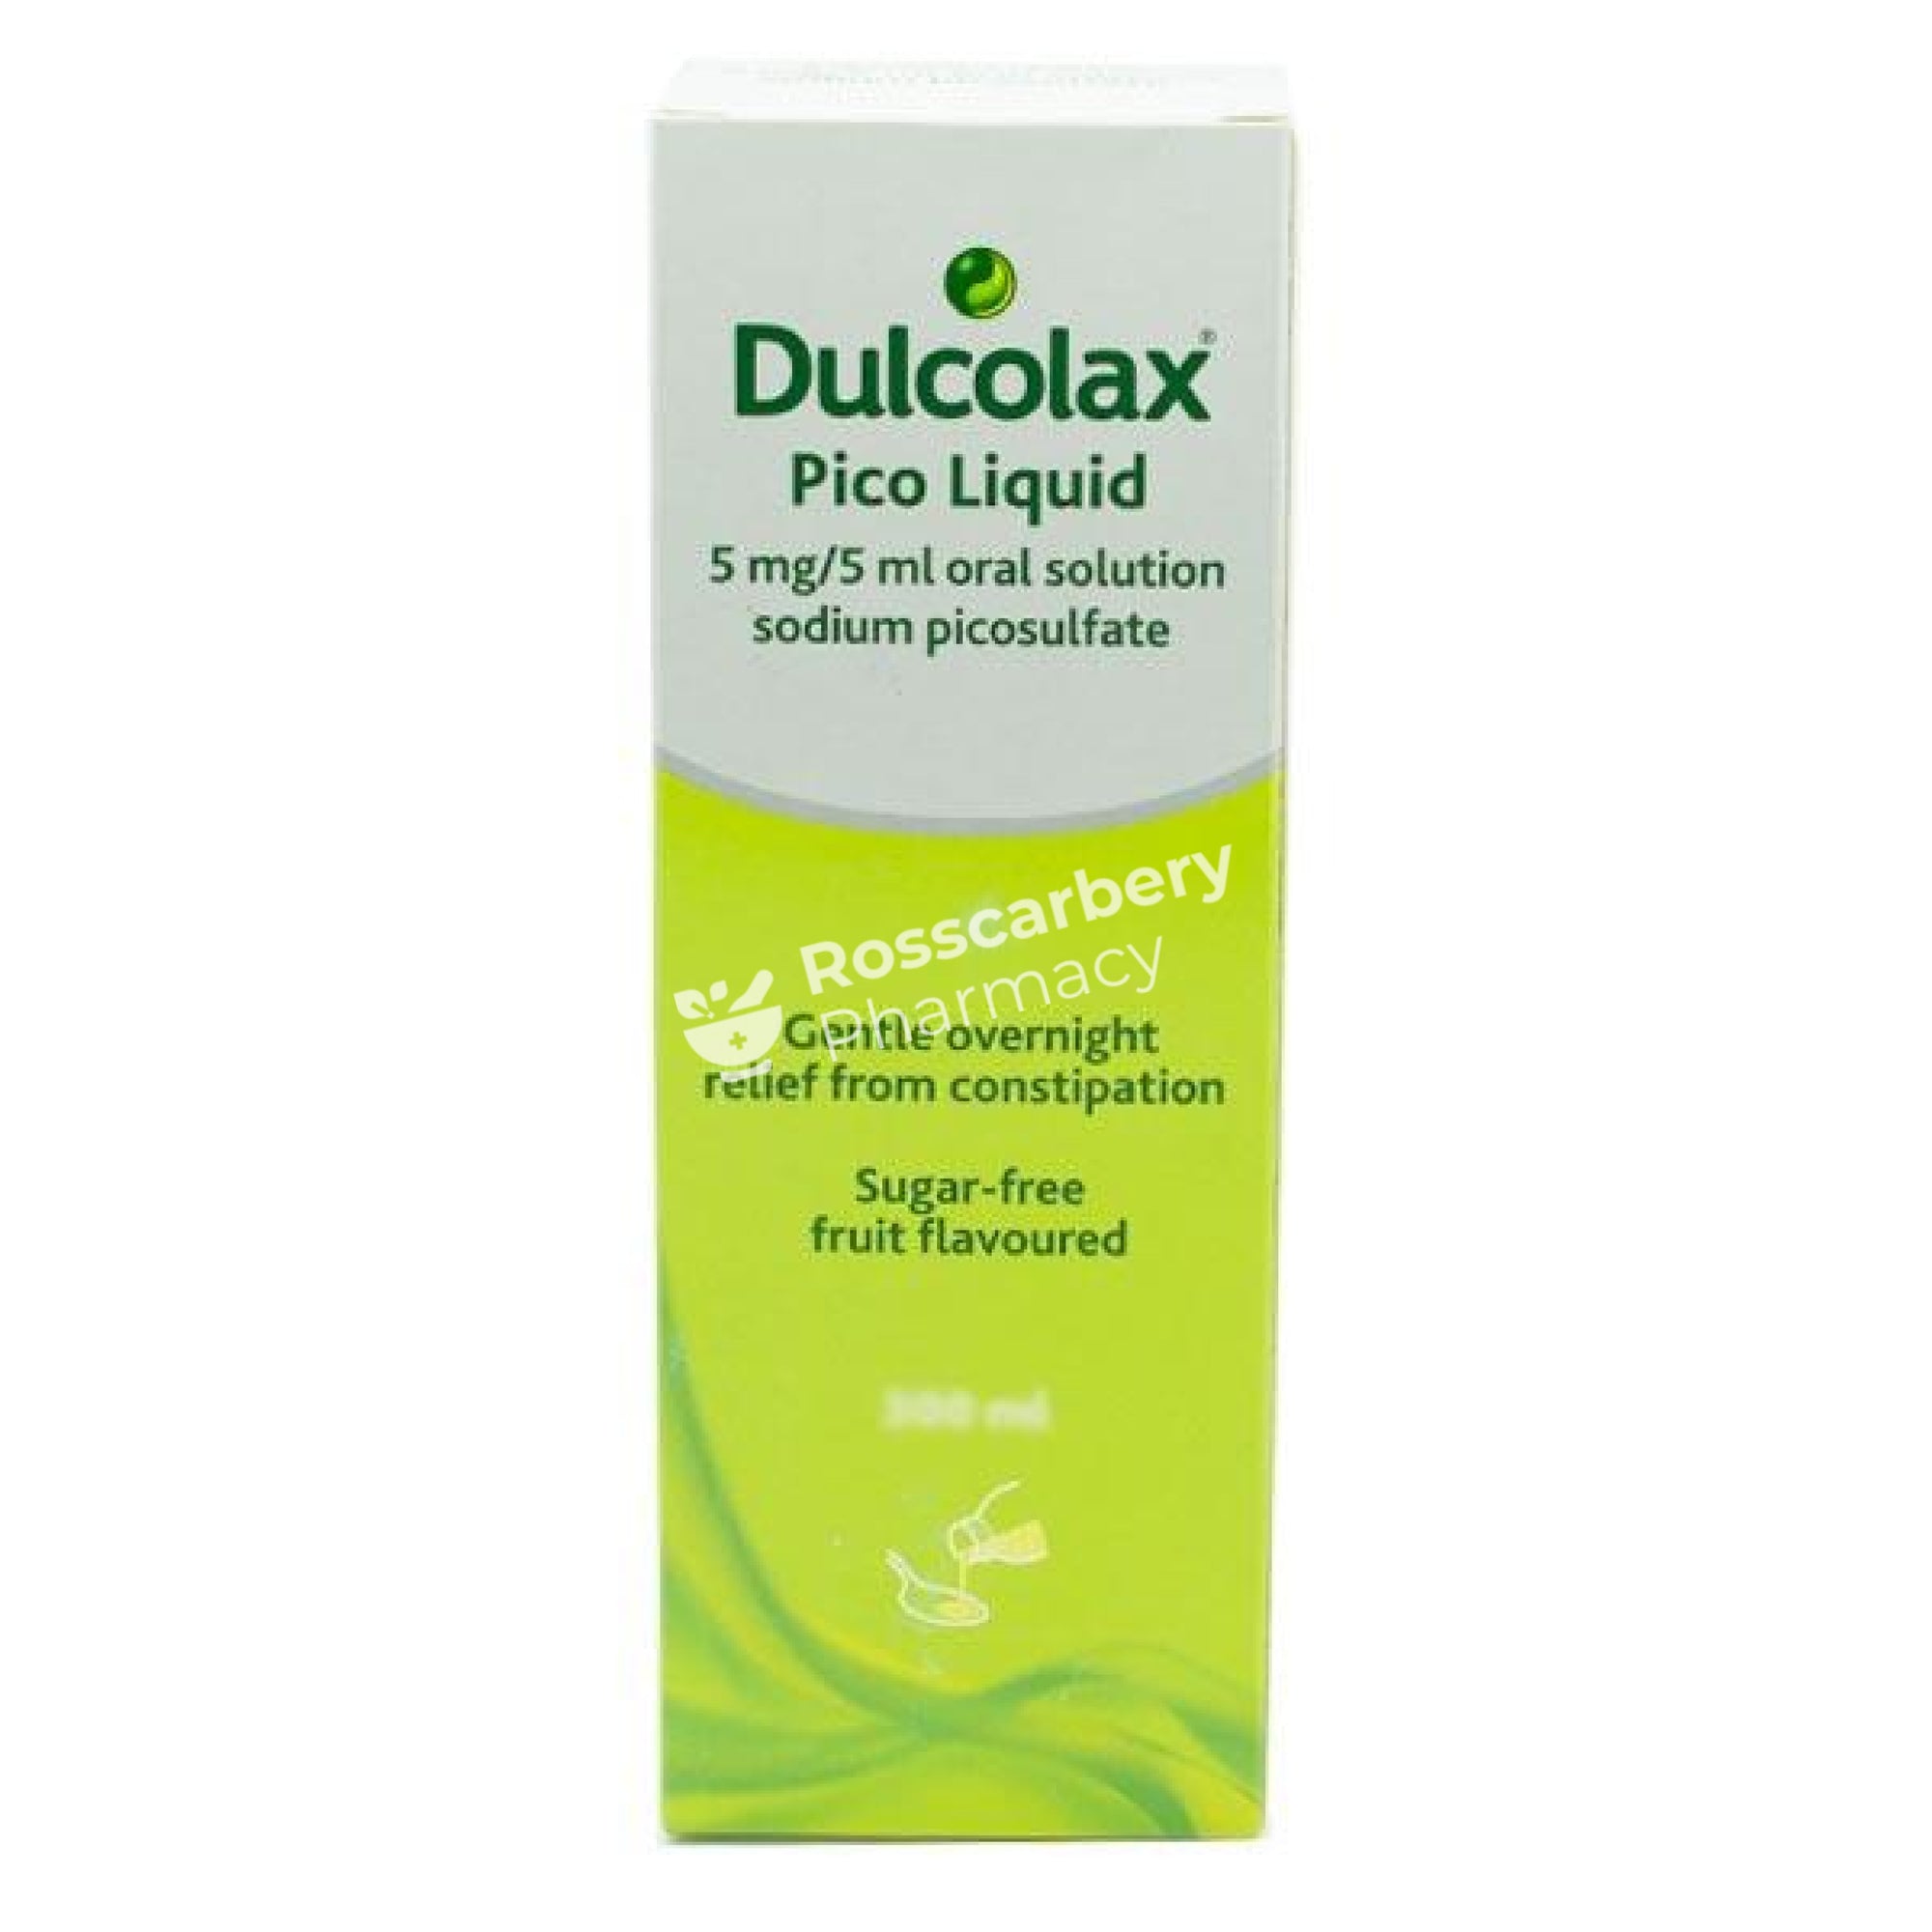 Dulcolax Pico Liquid 5Mg/5Ml Oral Solution Constipation